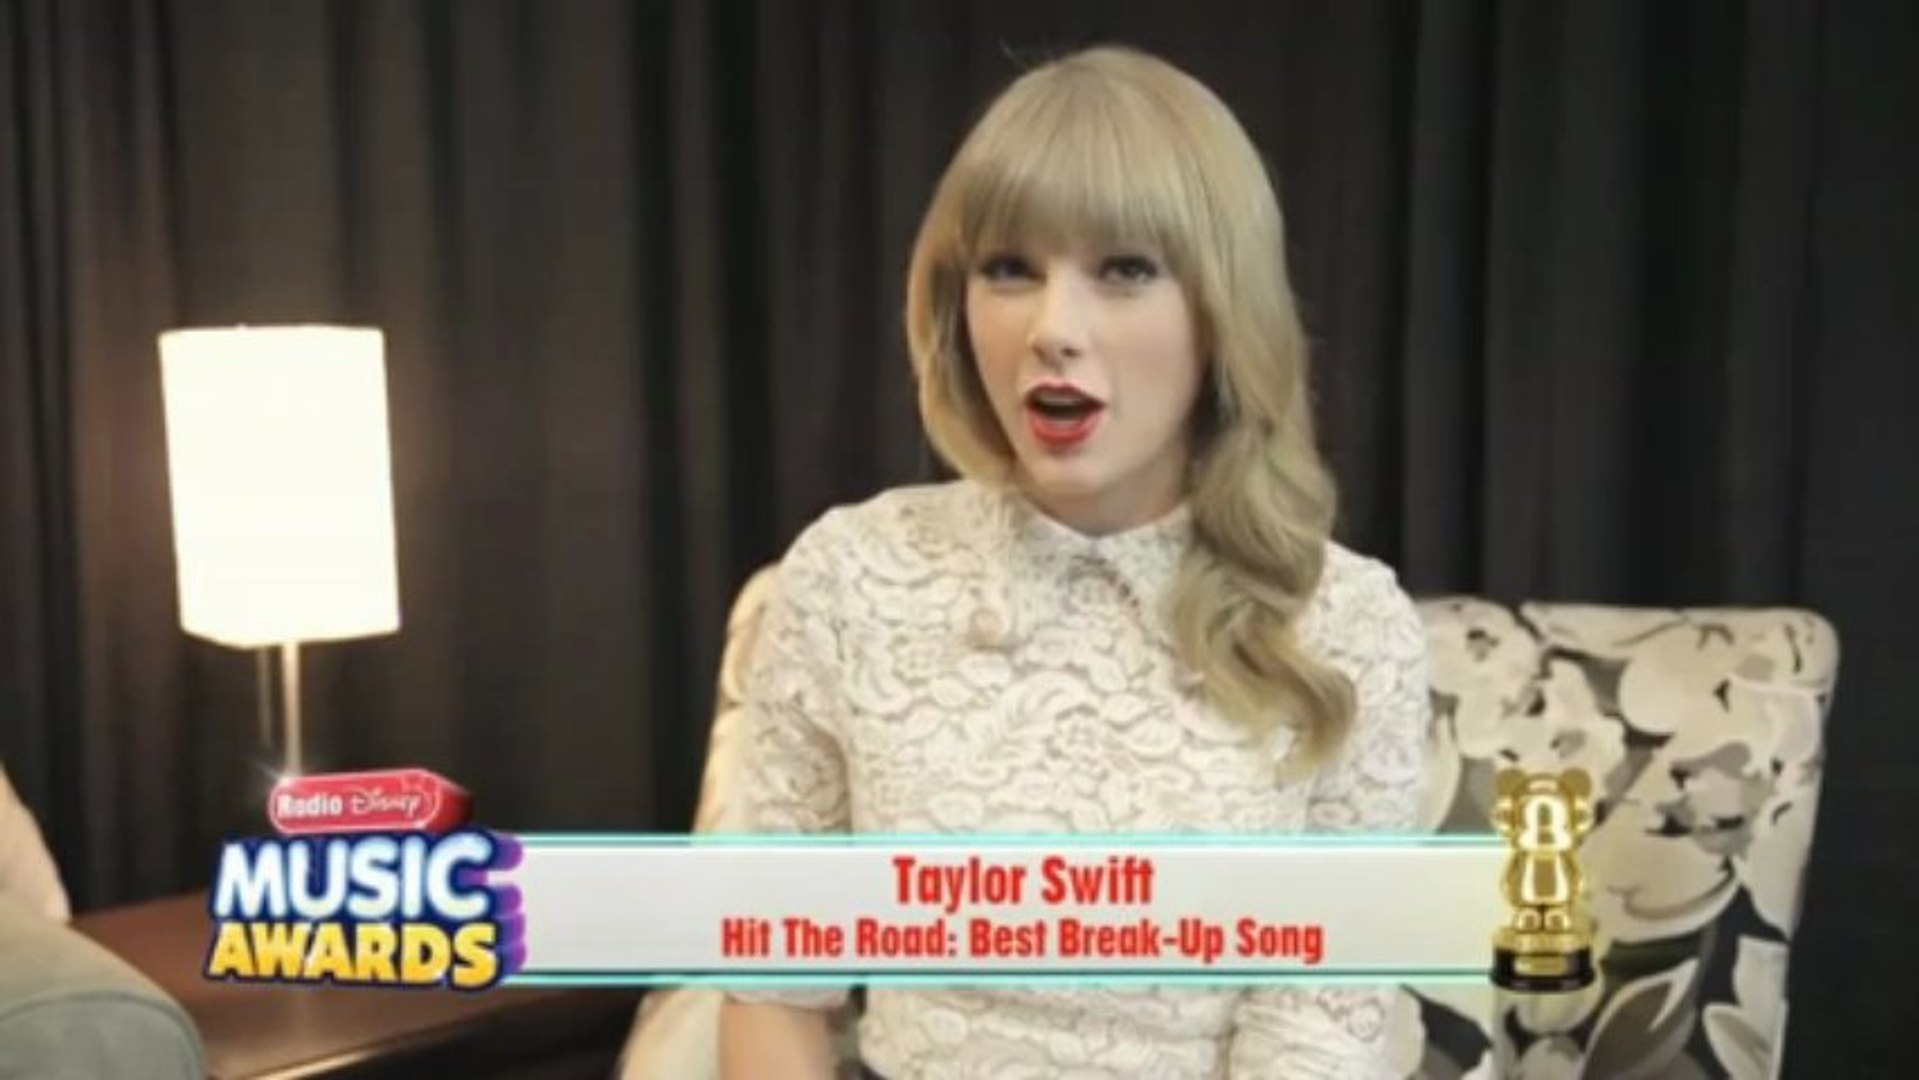 Taylor Swift Acceptance Video 2013 Disney Music Awards